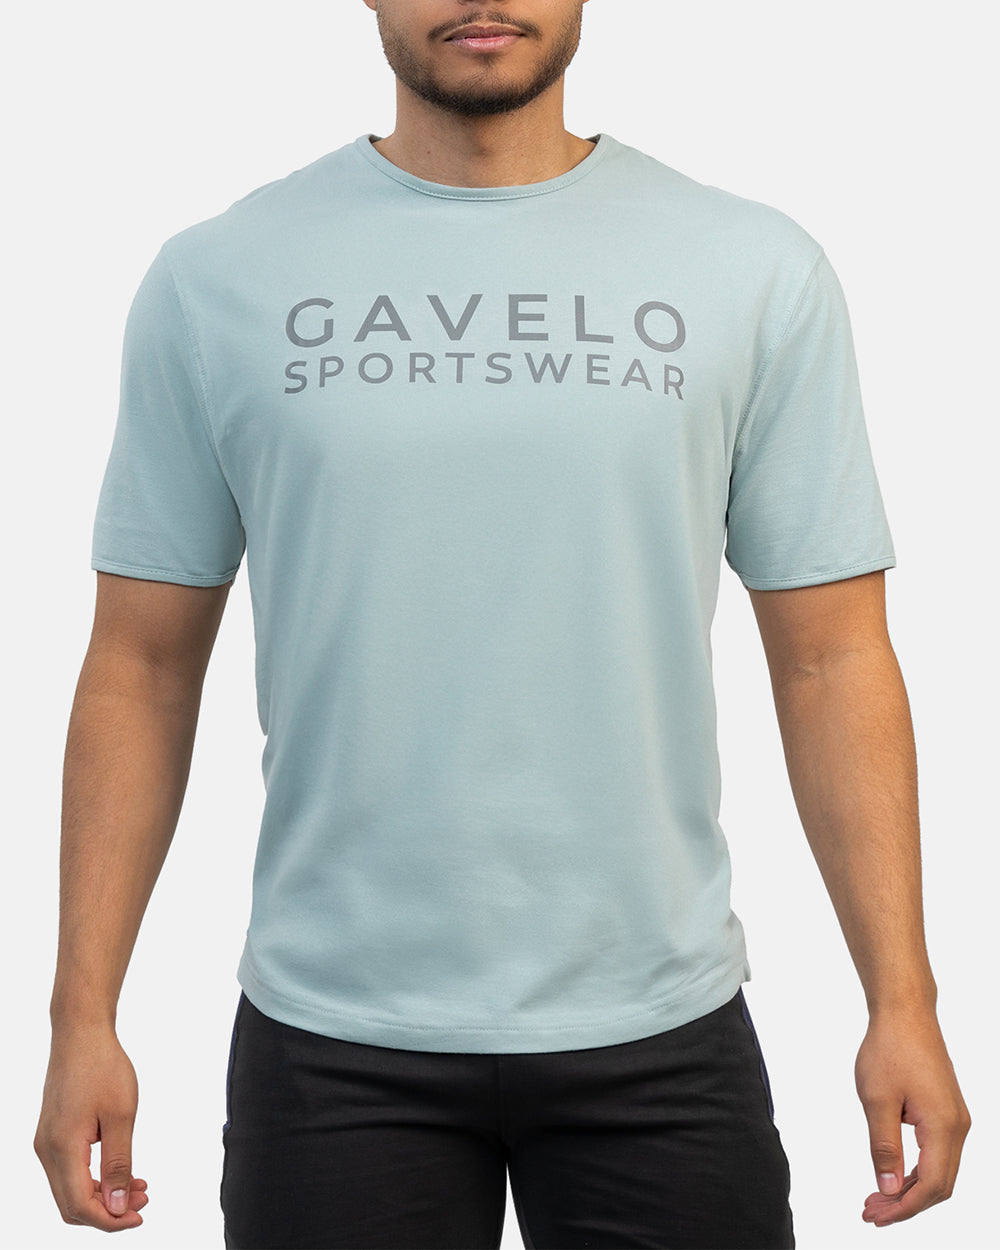 GAVELO Athleisure T-Shirt Urban Pistage